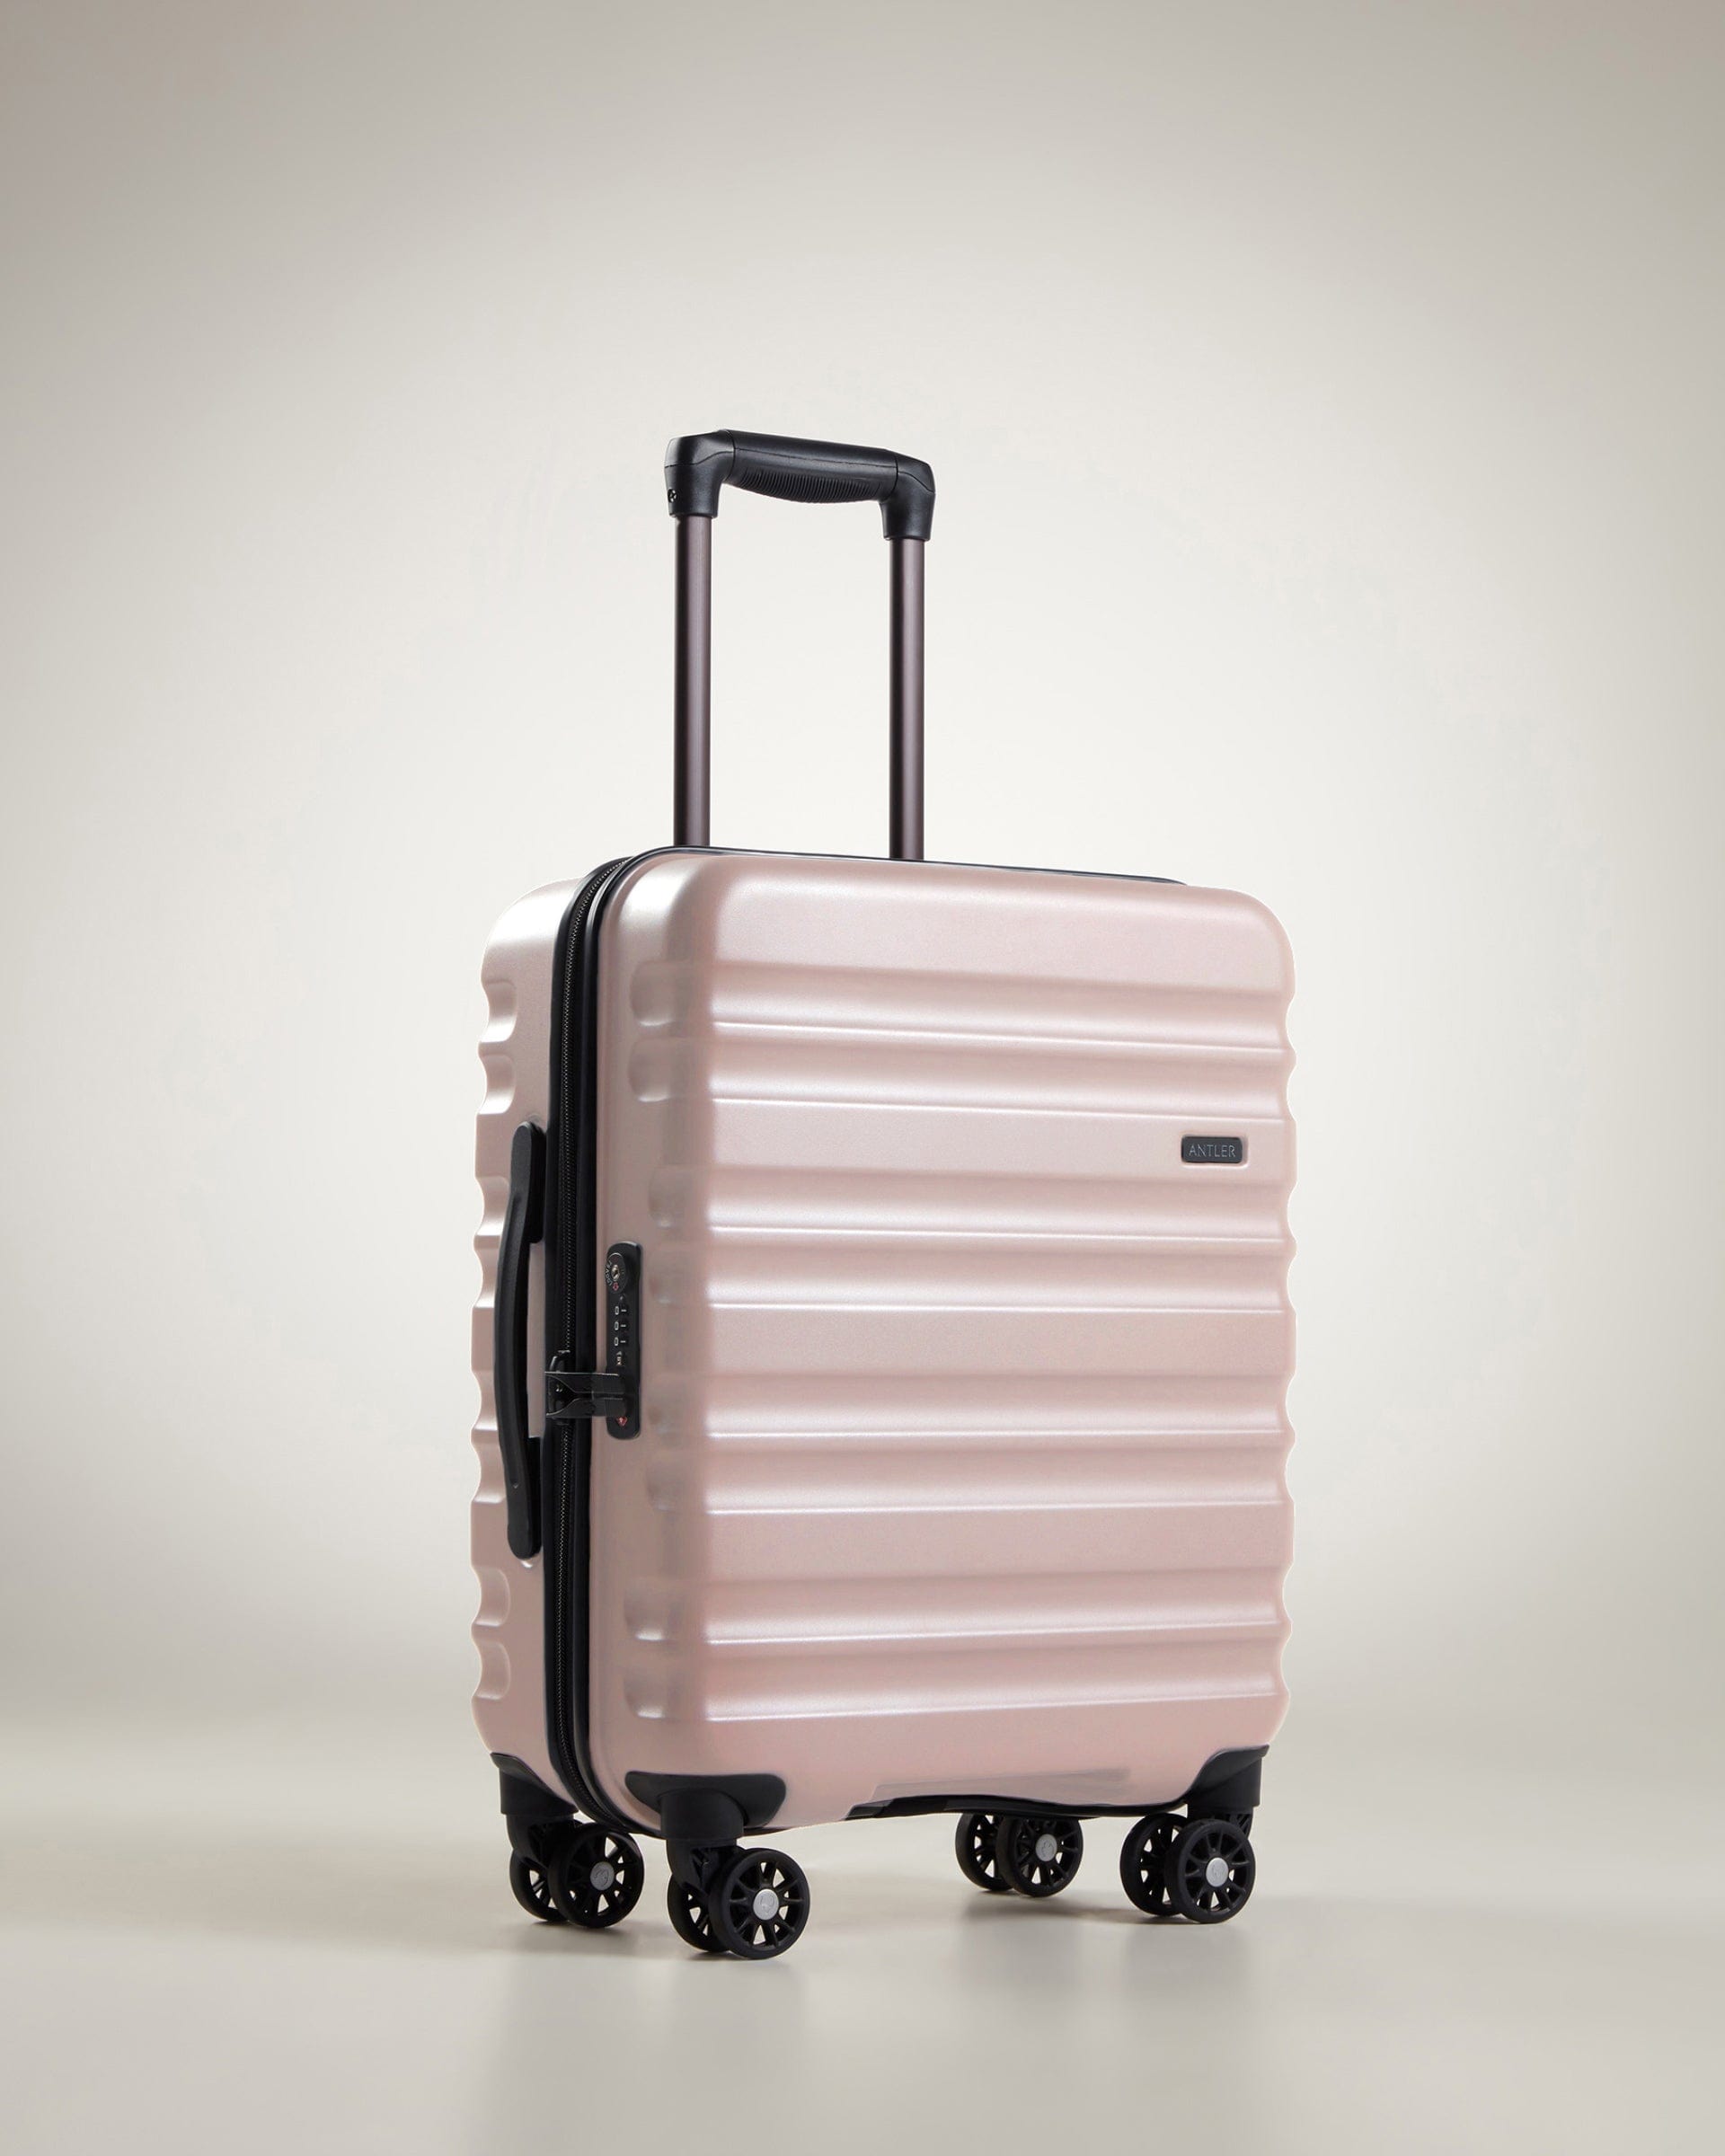 View Antler Clifton Cabin Suitcase In Blush Size 55cm x 40cm x 20cm information